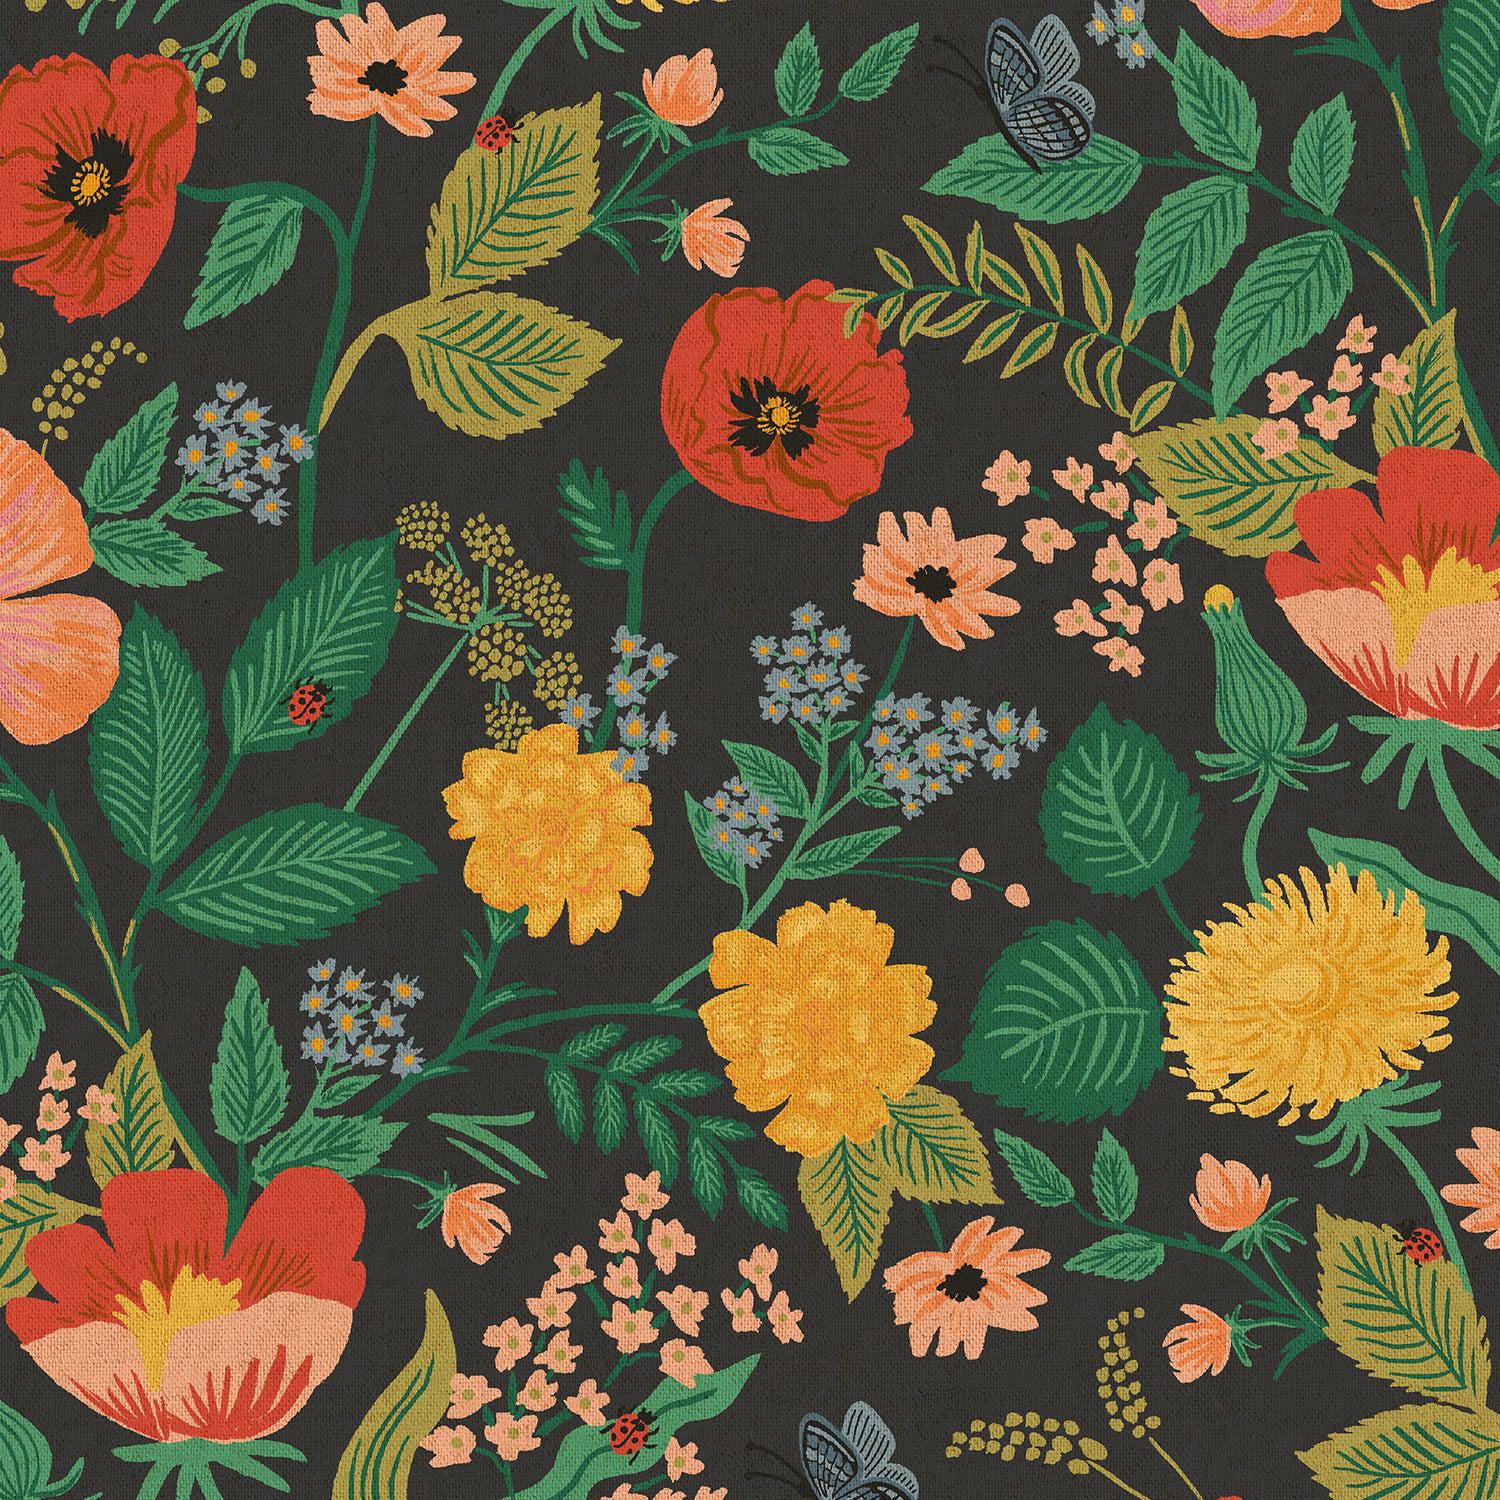 Cotton + Steel-Poppy Fields Black on Canvas-fabric-gather here online